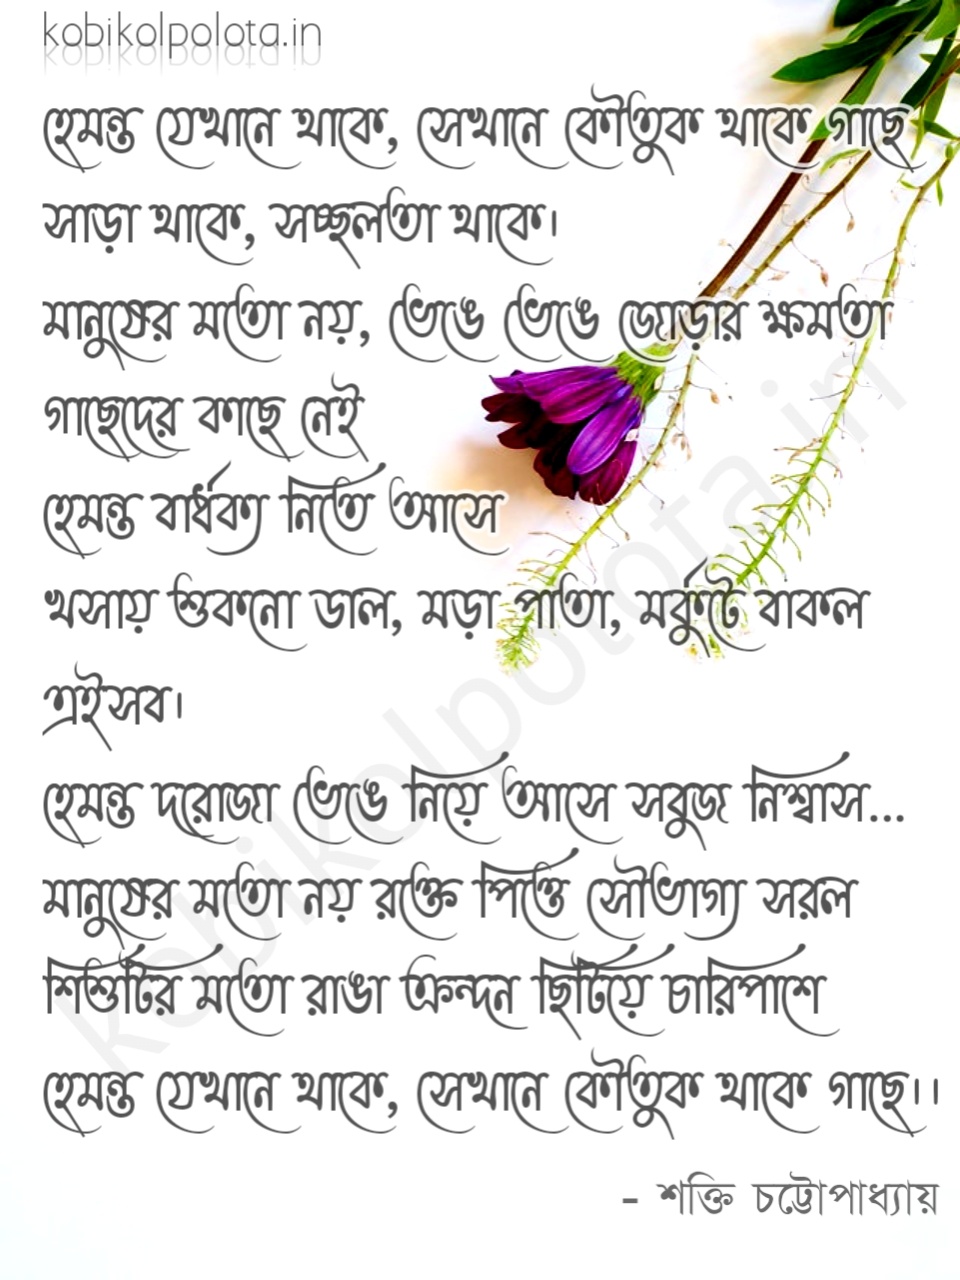 Hemanta jekhane thake kobita : হেমন্ত যেখানে থাকে – শক্তি চট্টোপাধ্যায়